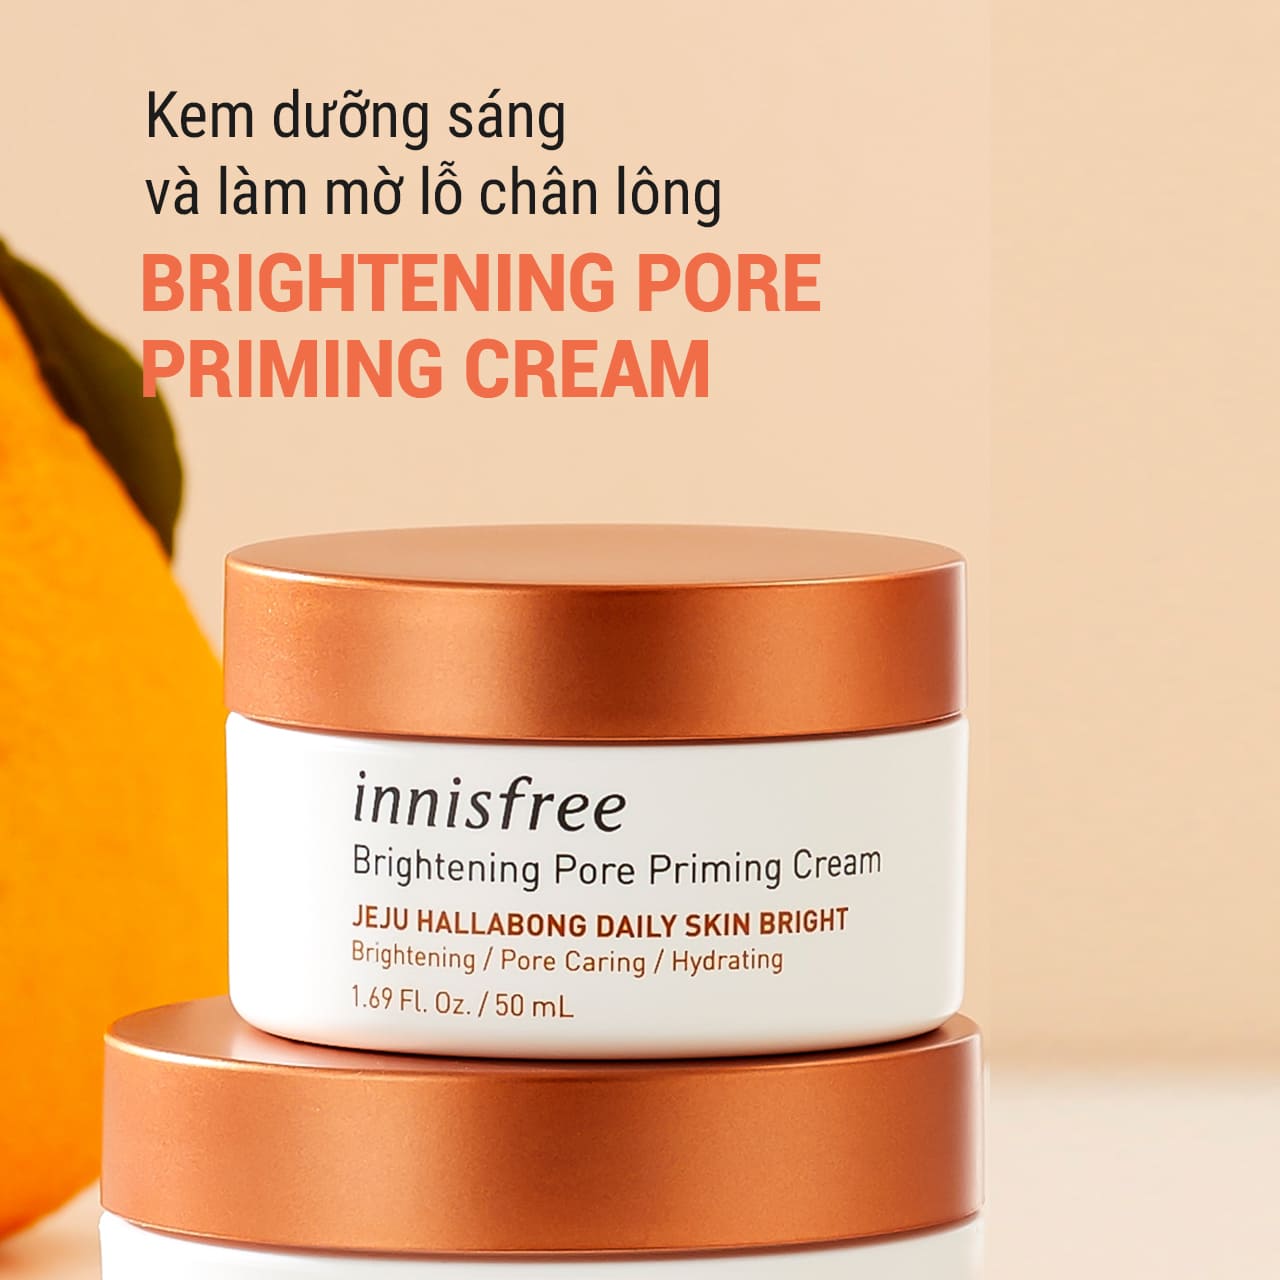 Bộ Tinh chất Retinol Cica Repair Ampoule và Kem dưỡng Brightening Pore Priming Cream